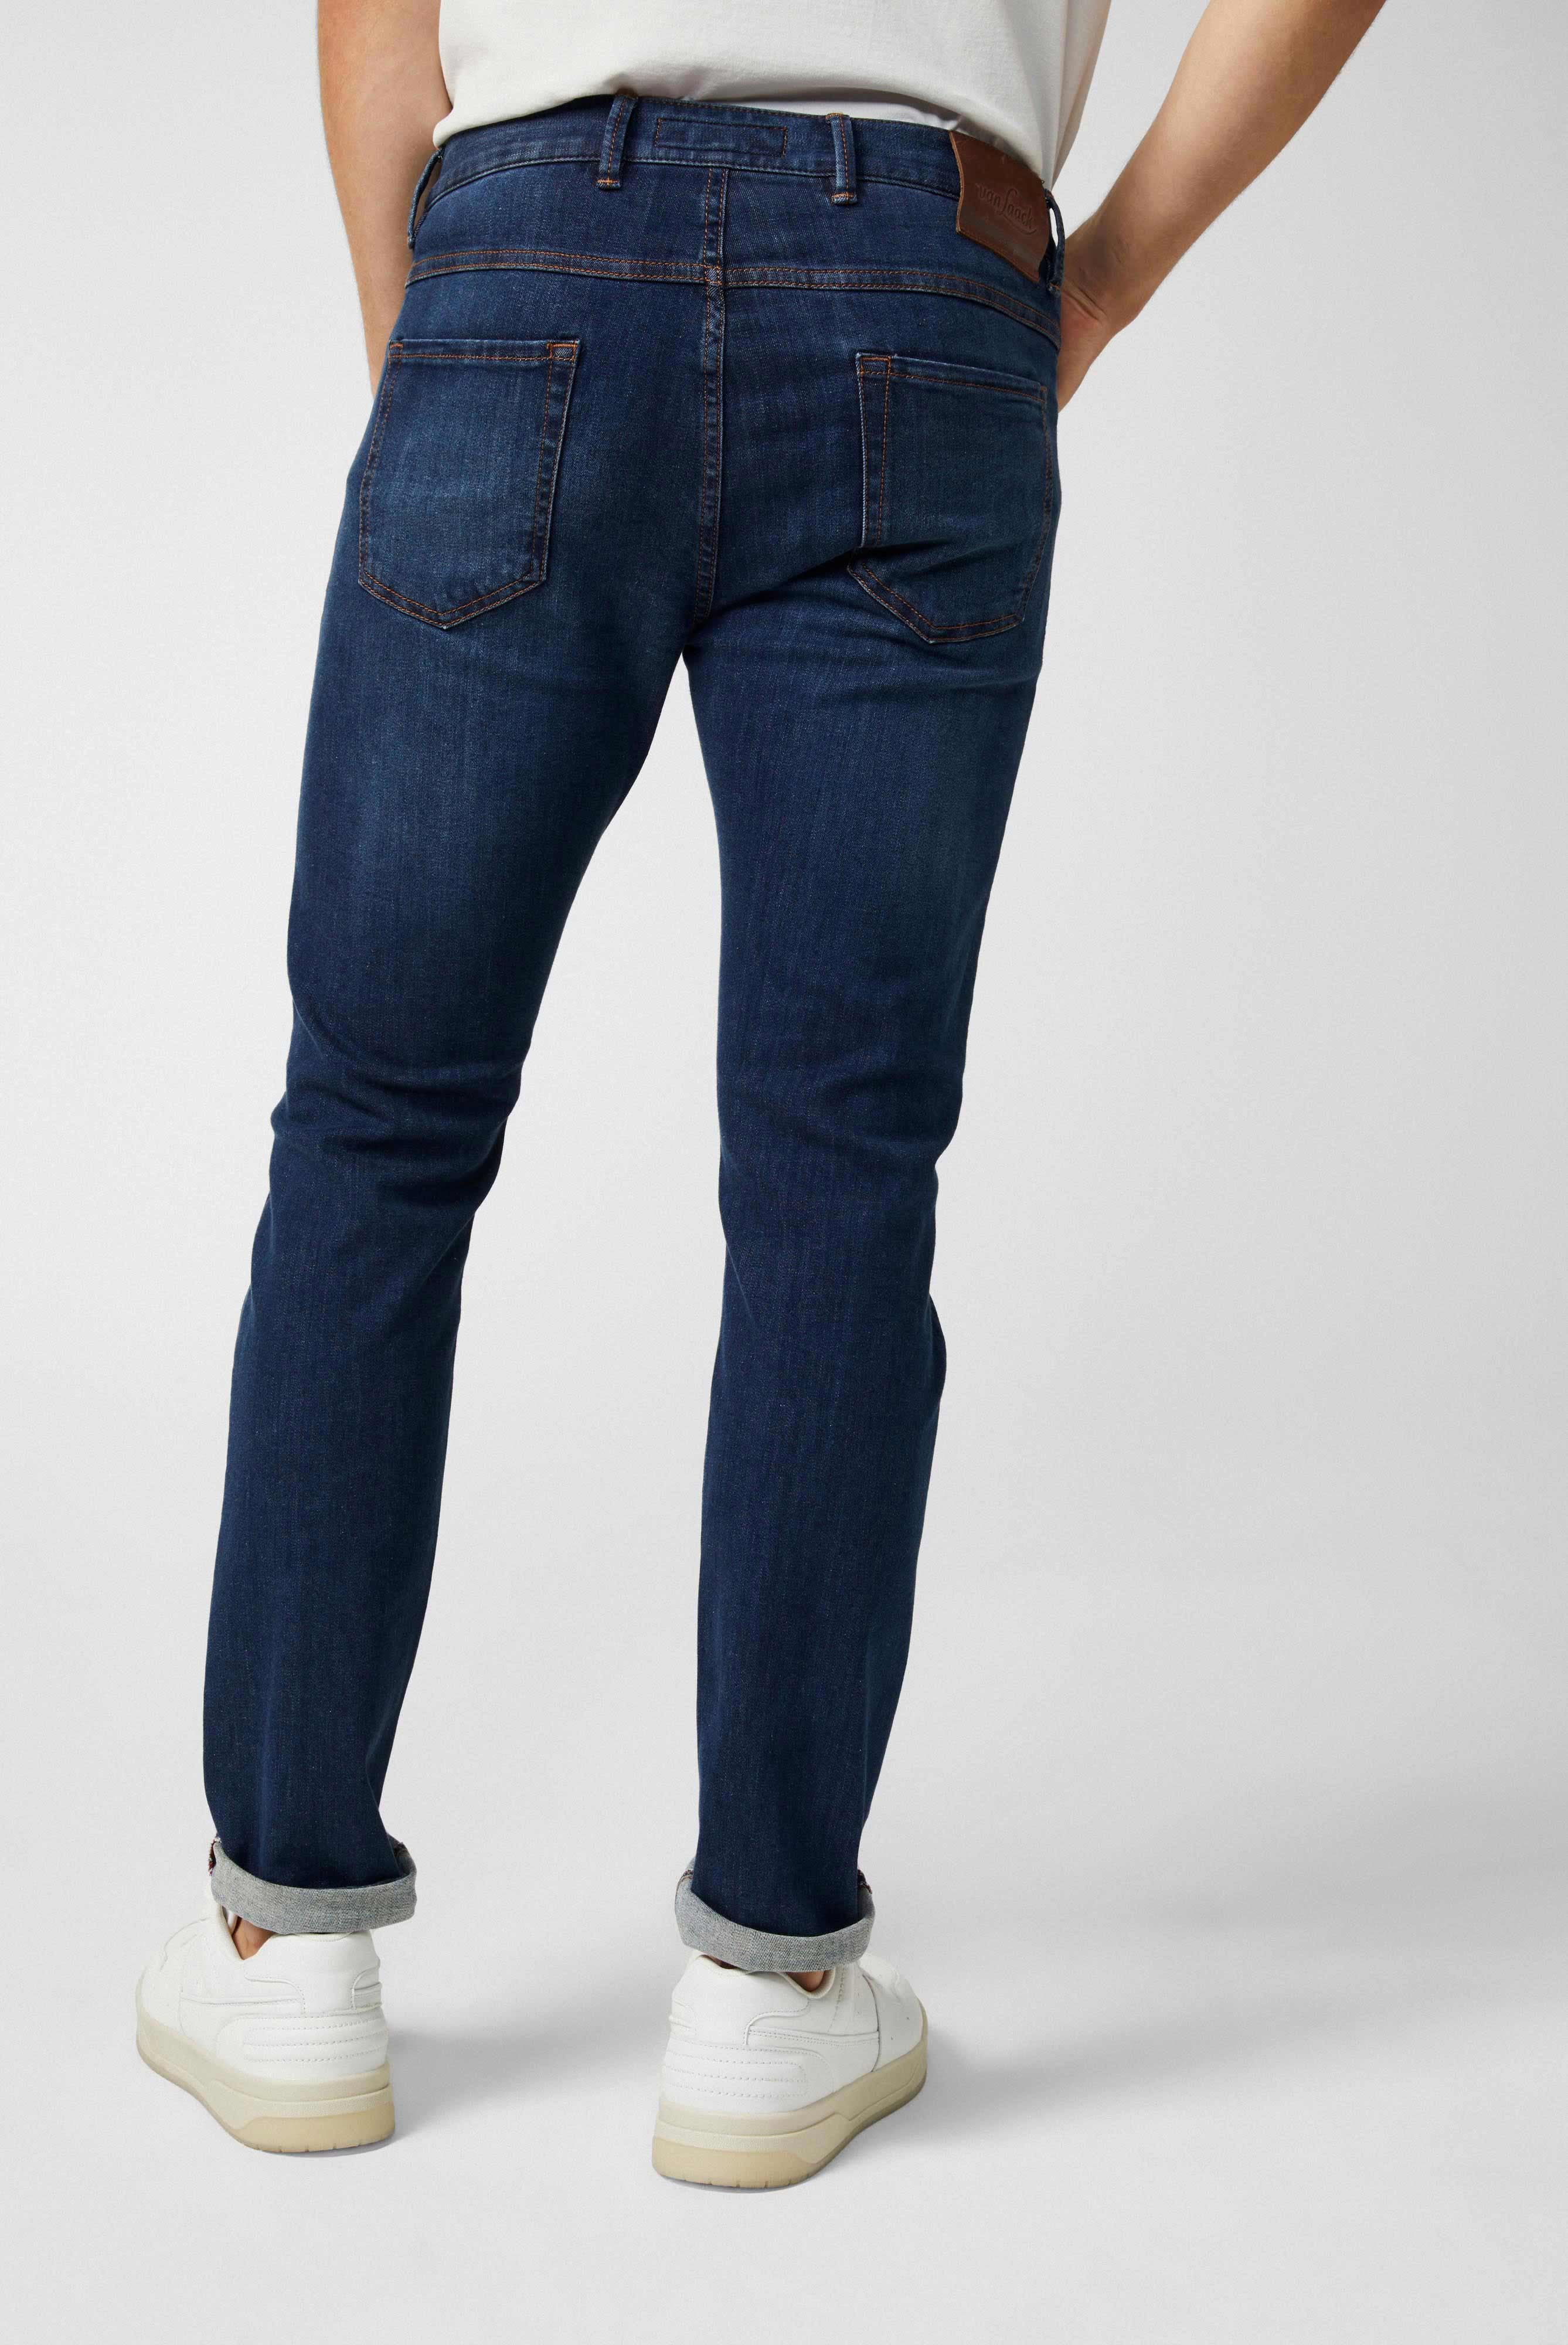 Jeans & Hosen+Jeanshose mit Streth Slim Fit+80.7857..J00117.780.31N